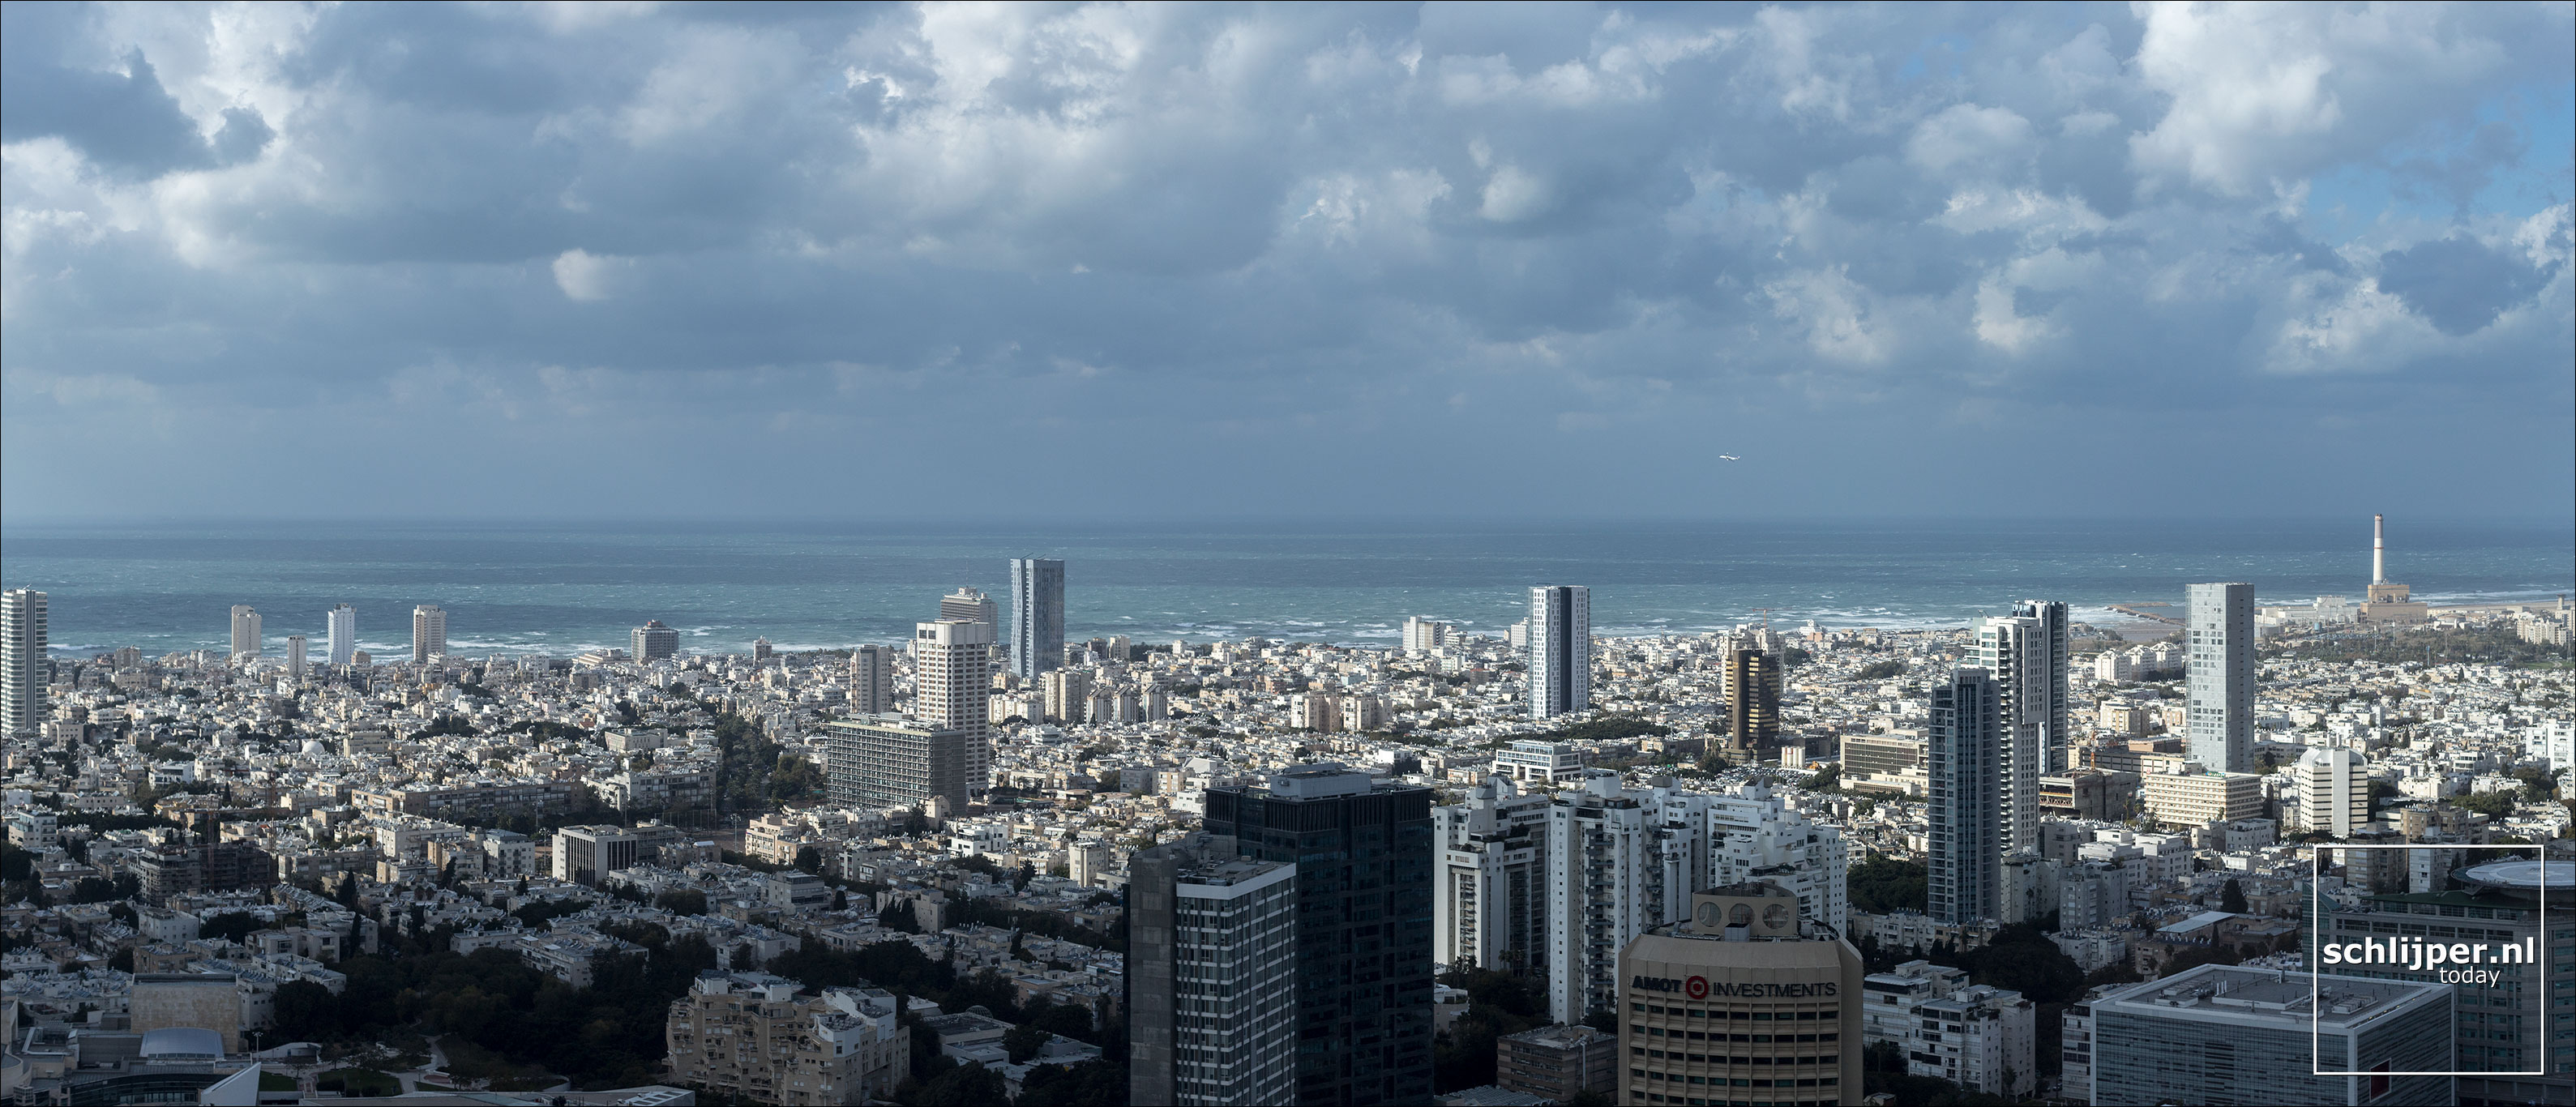 Israel, Tel Aviv, 8 januari 2019